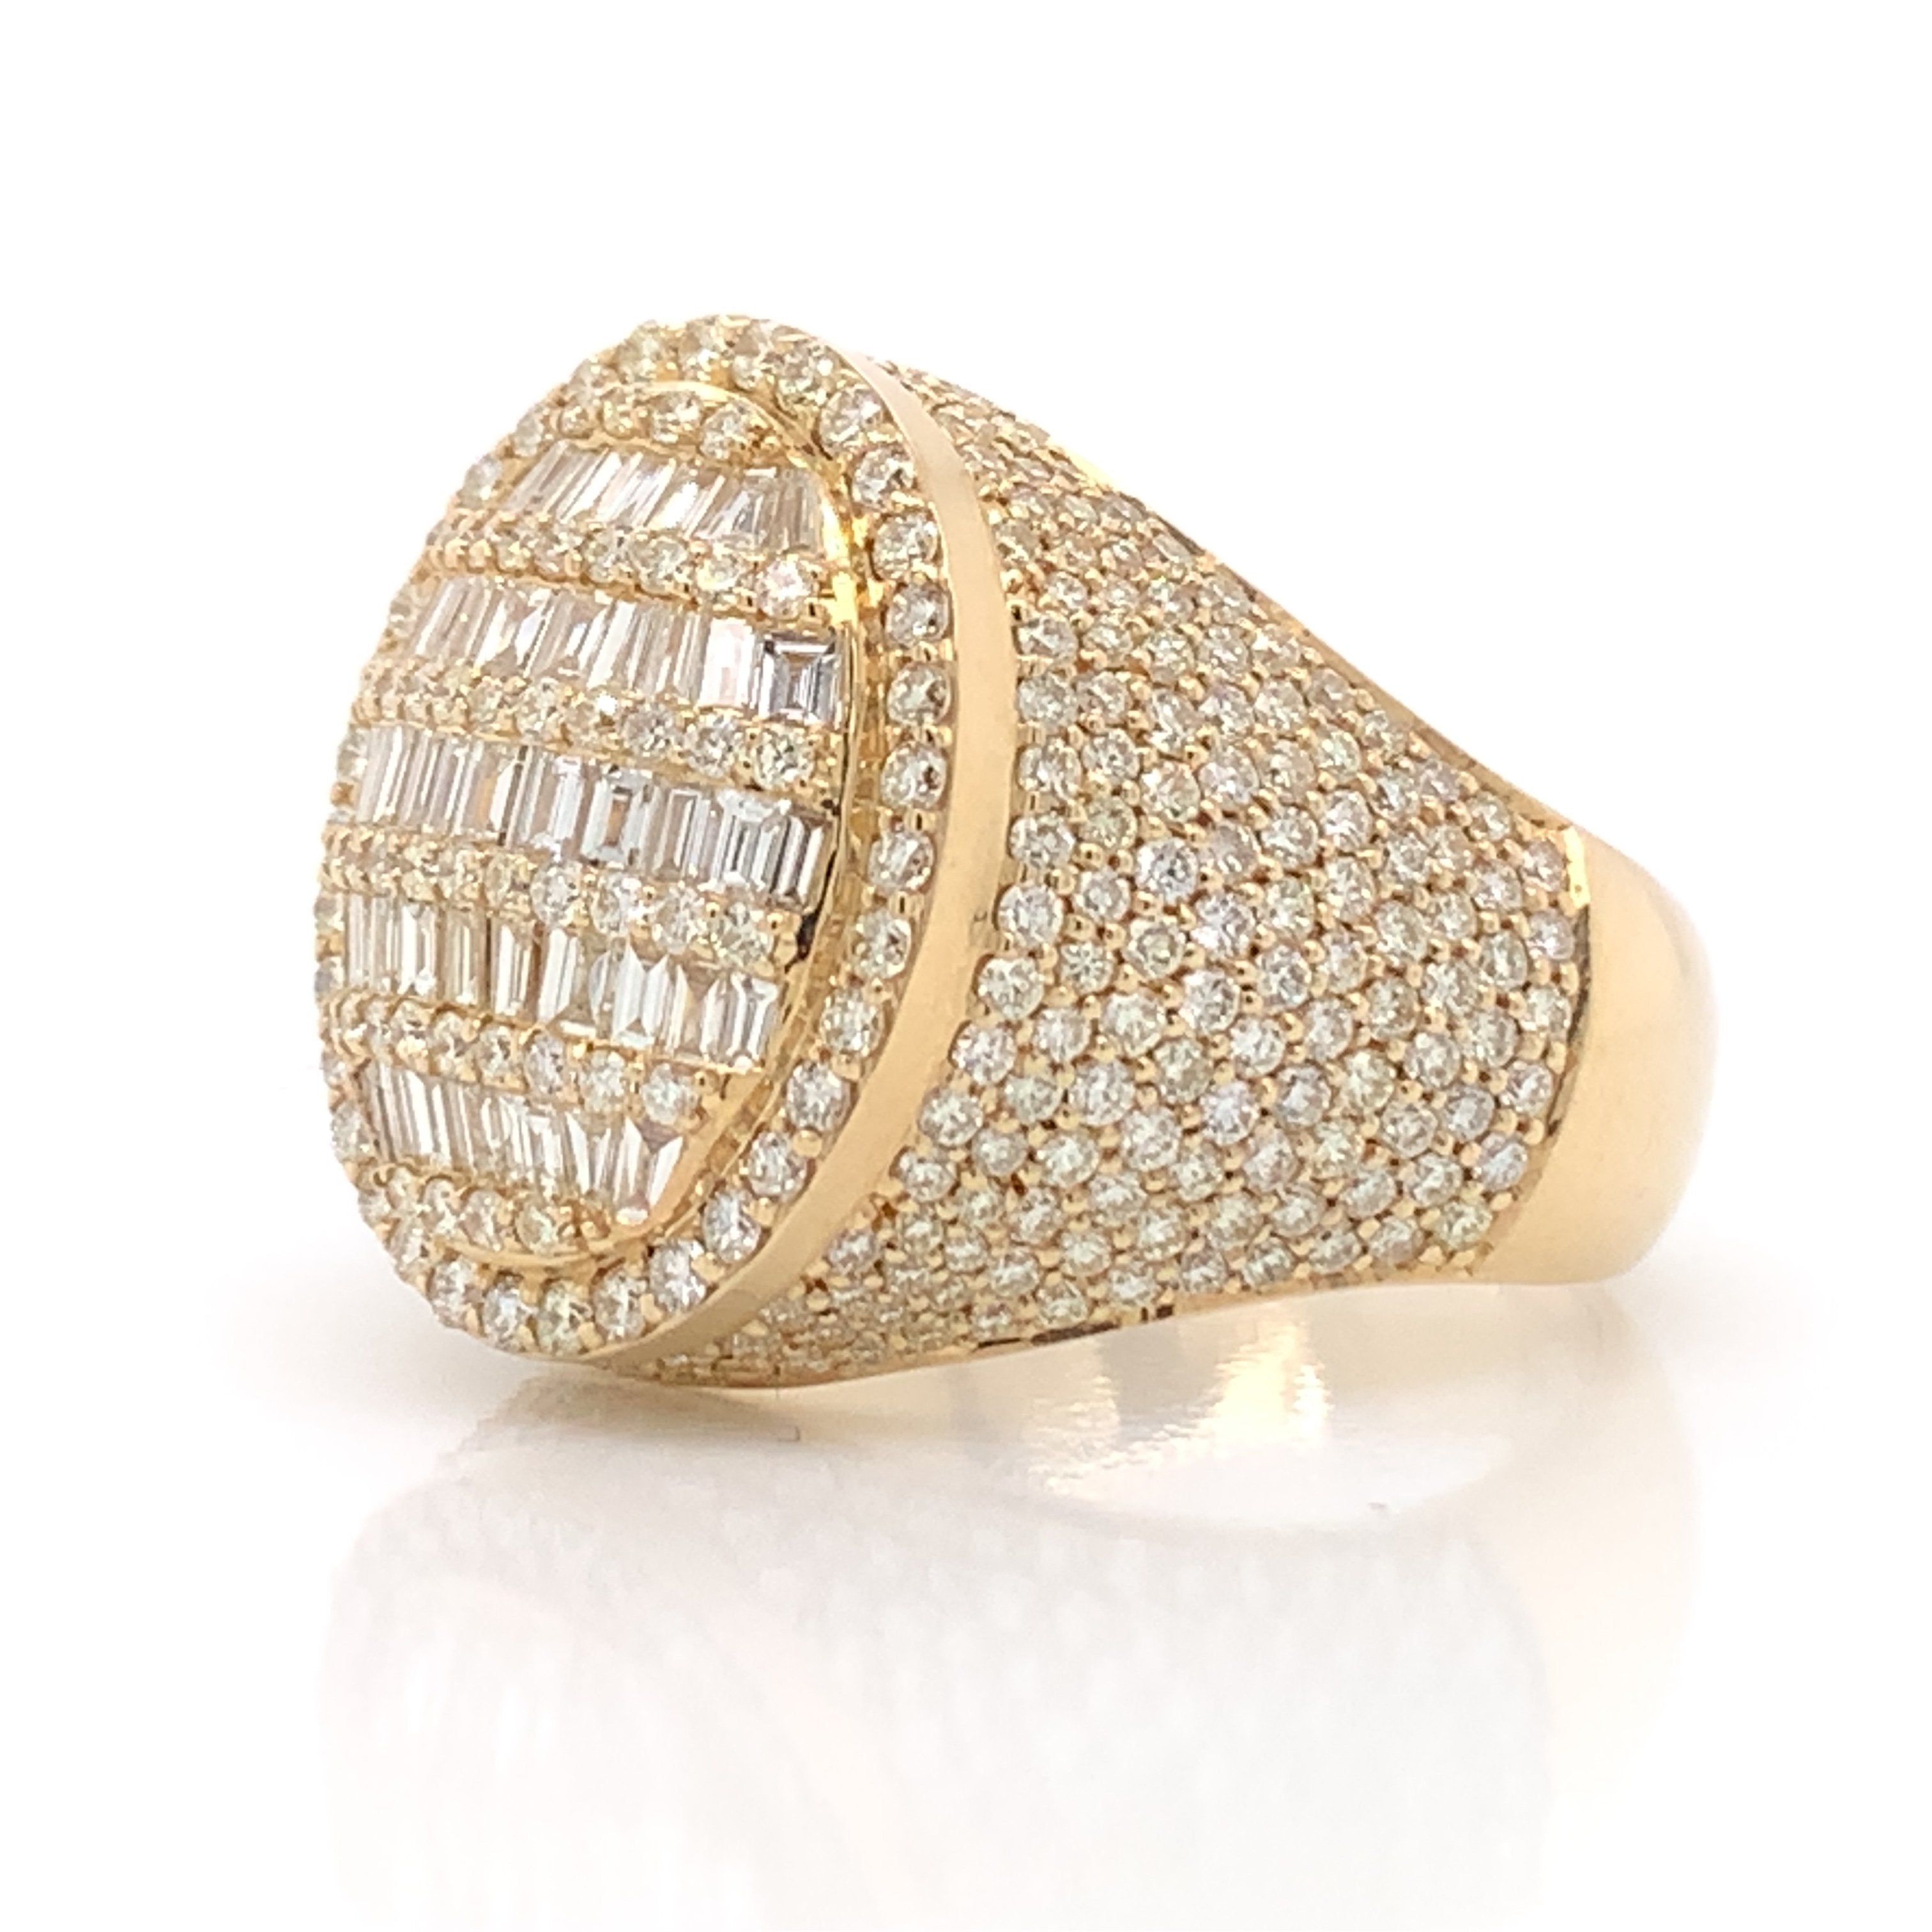 3.75 CT. Diamond Ring 10KT Gold - White Carat Diamonds 